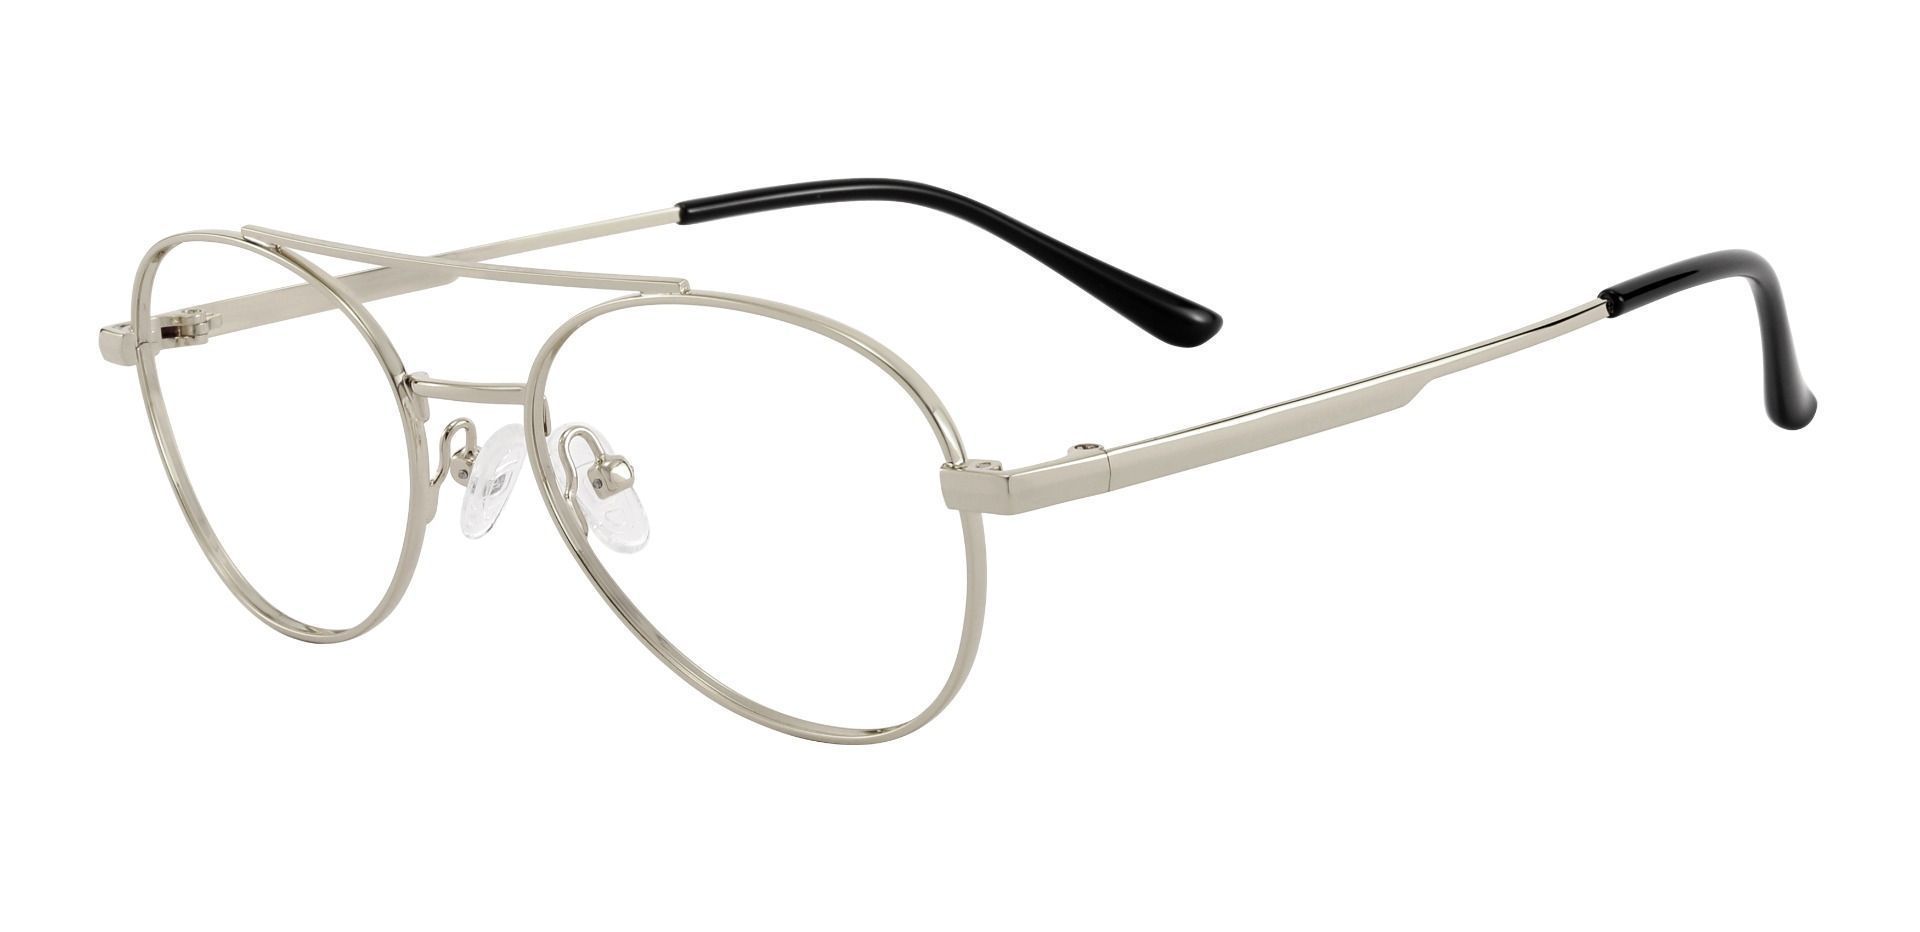 Hinton Aviator Eyeglasses Frame - Silver